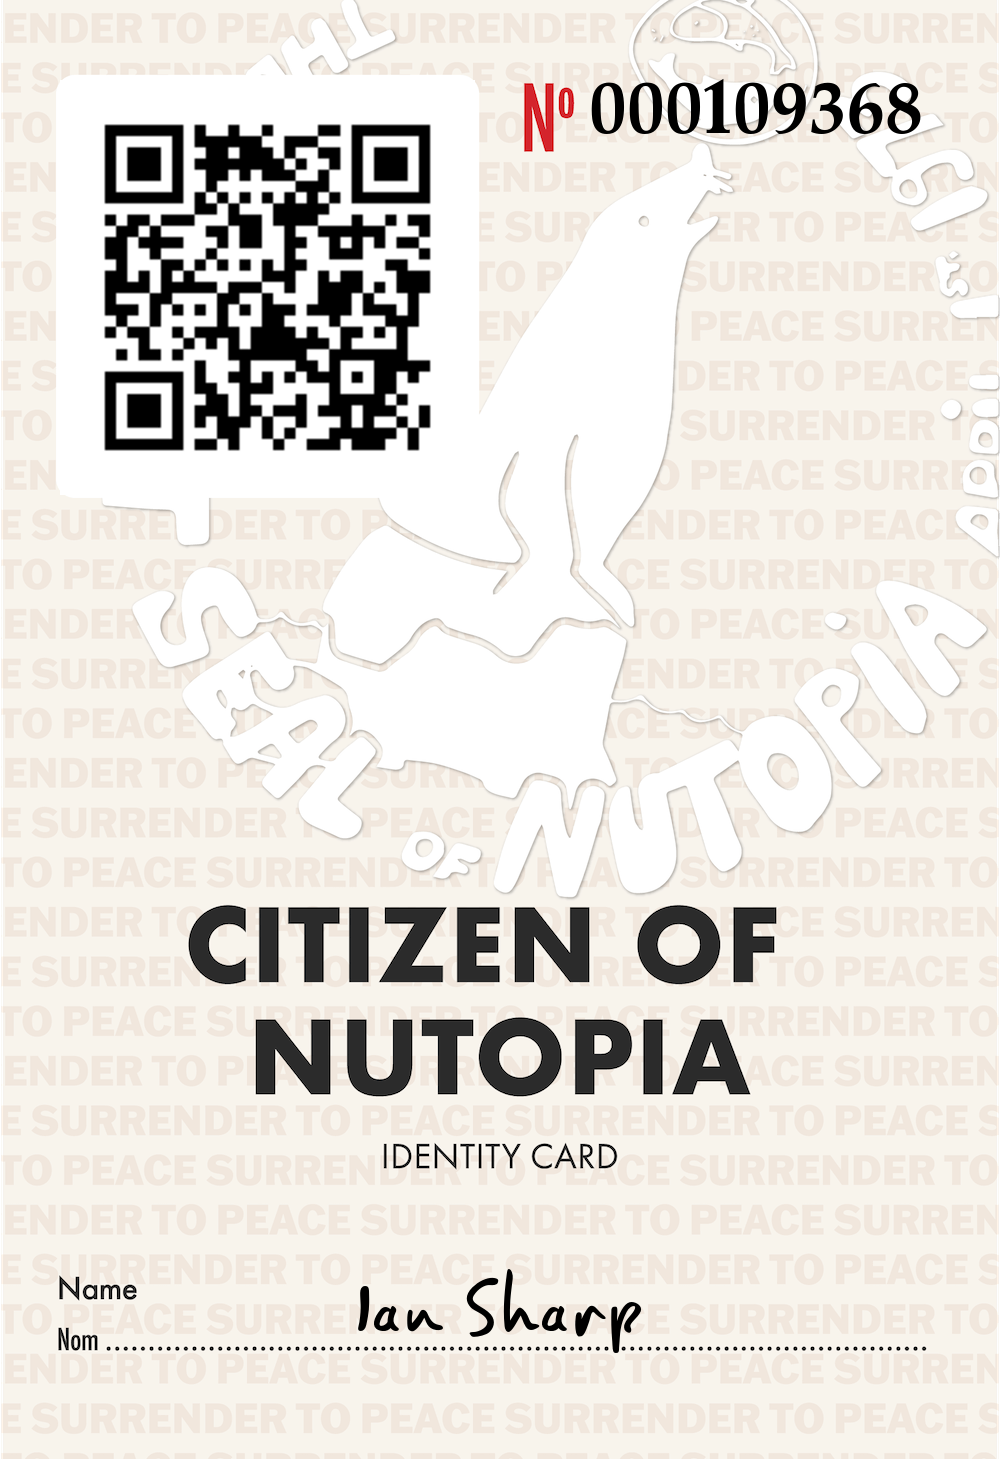 Nutopian Citizenship Card registered to Ian Sharp